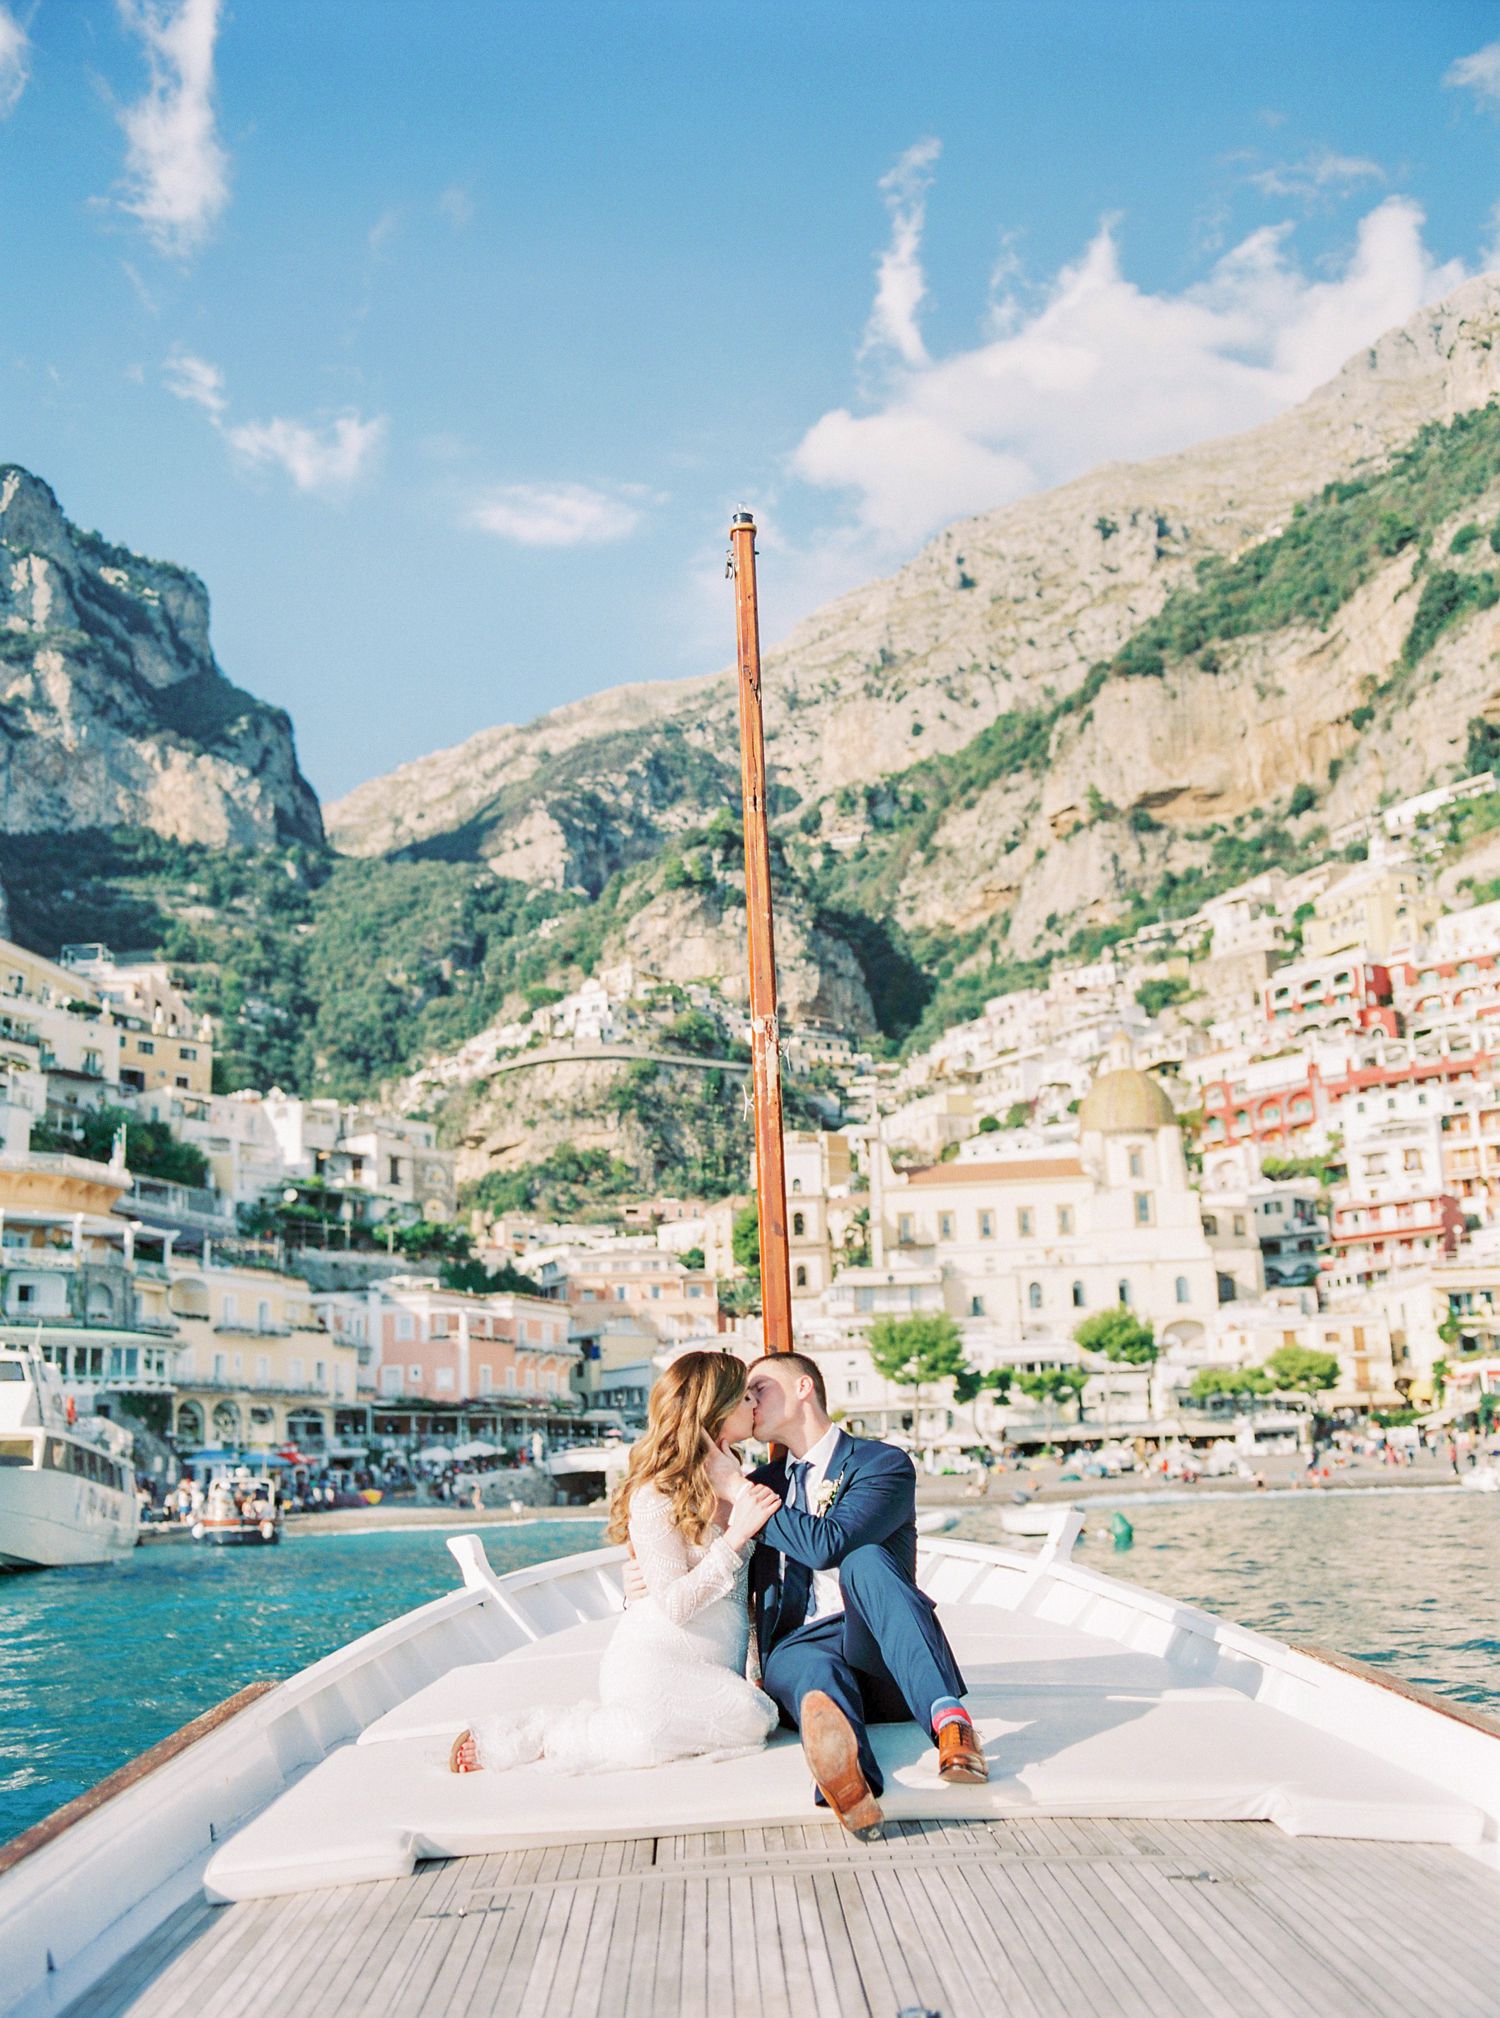 Destination wedding in Positano with a boat ride